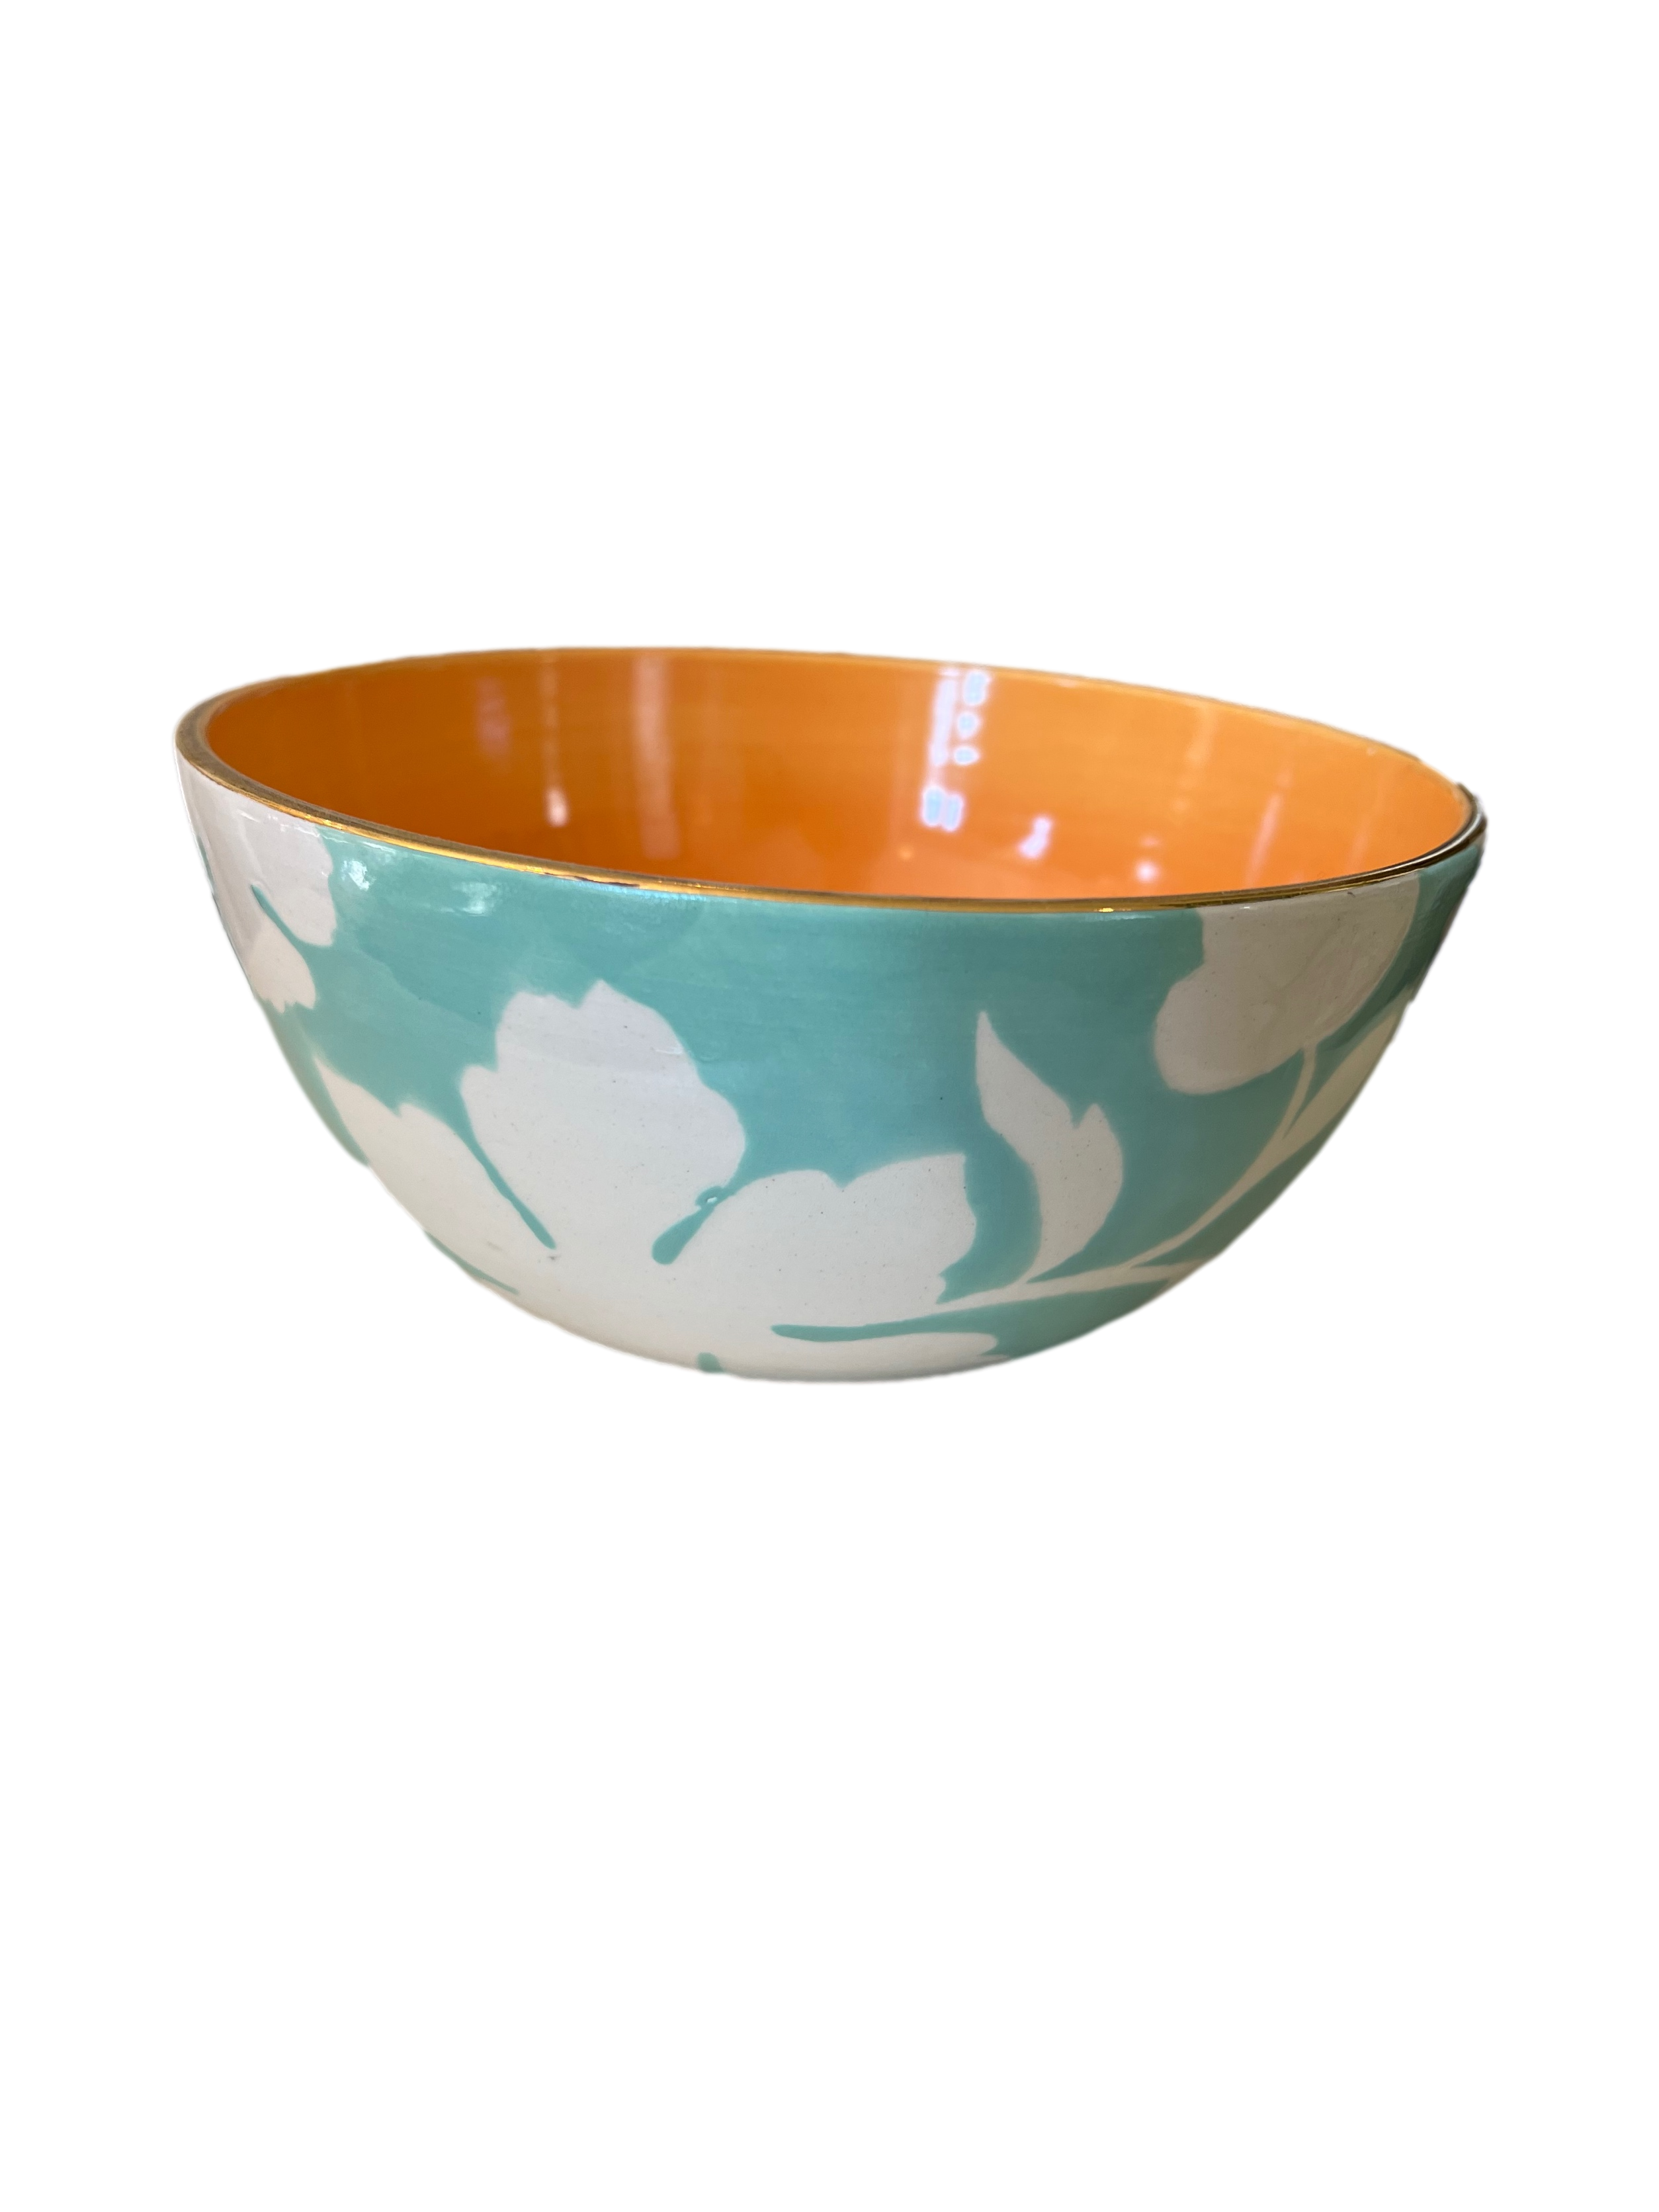 Candy Dish (Brearley Toile) Aqua (Orange Color Inside The Bowl)